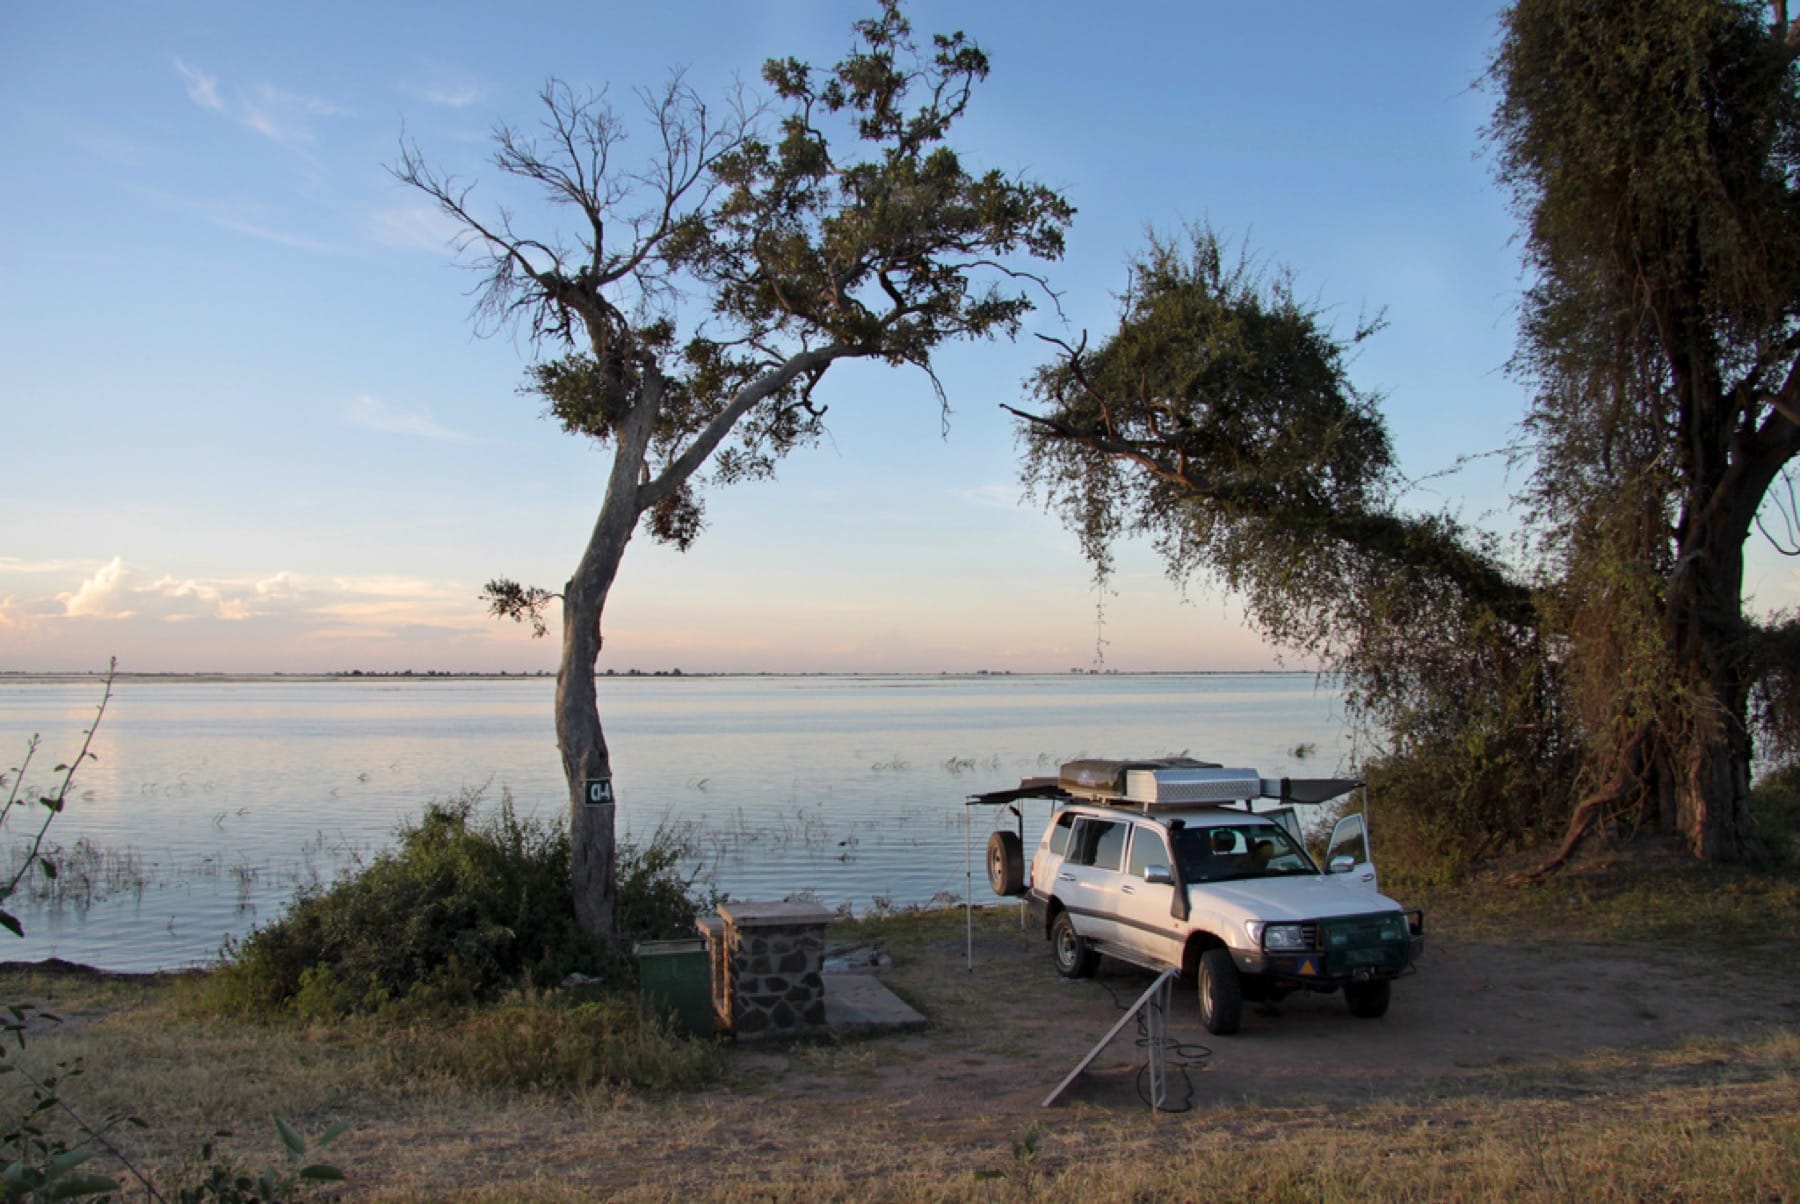 Ilhaha camp site in Botswana